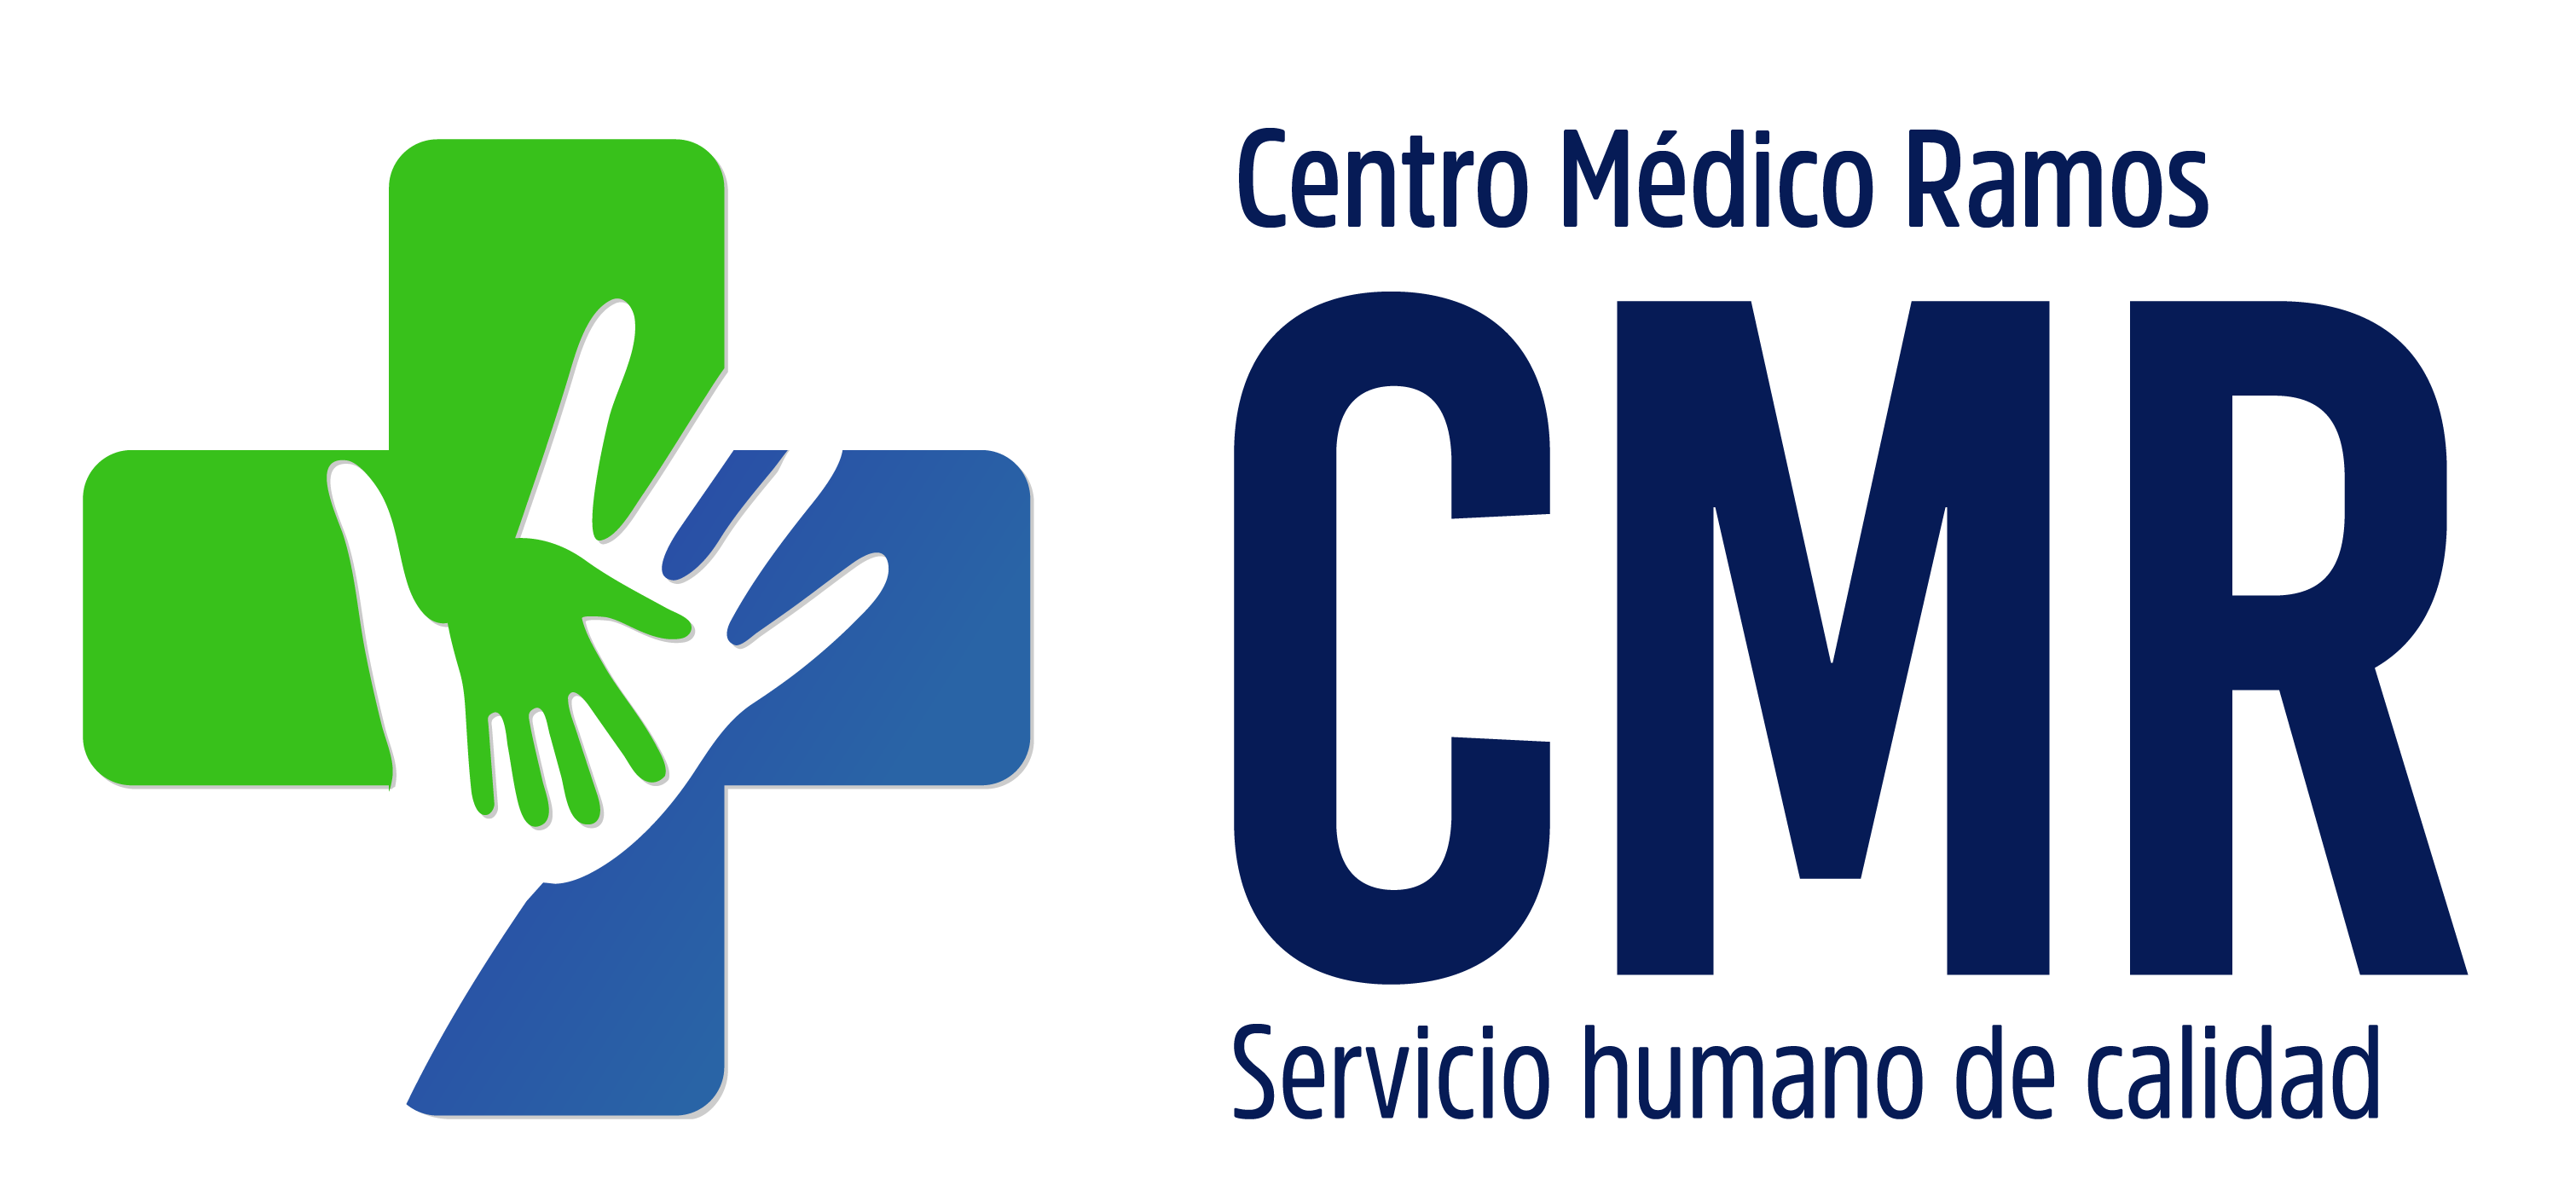 Centro Medico Ramos